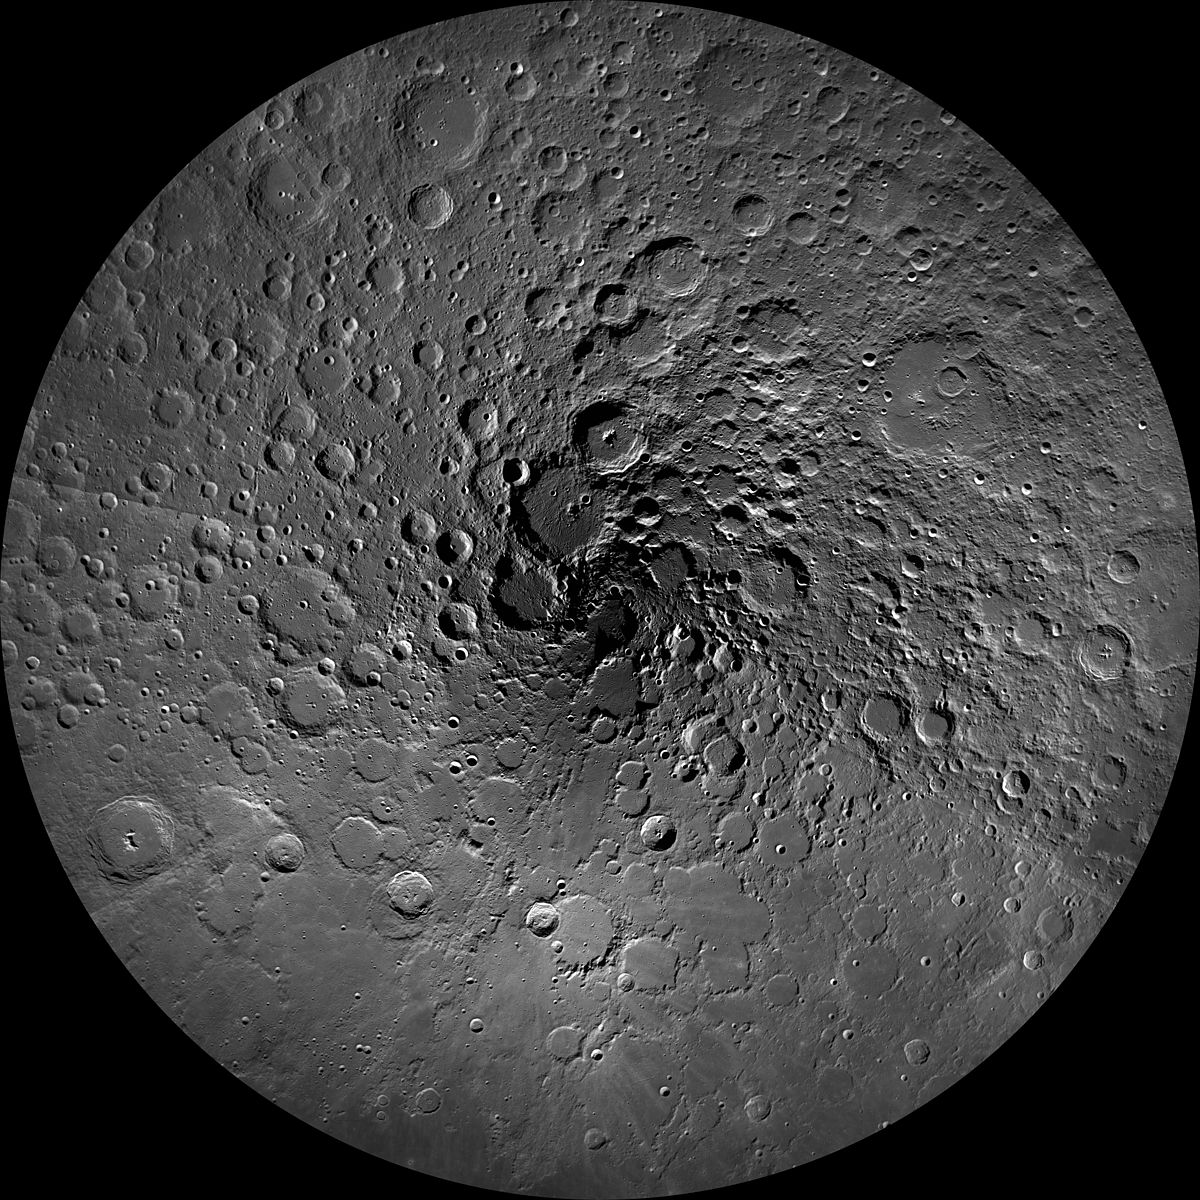 NASA Lunar Orbiter China’s Microsatellite Crash , Site on the Moon Spotted